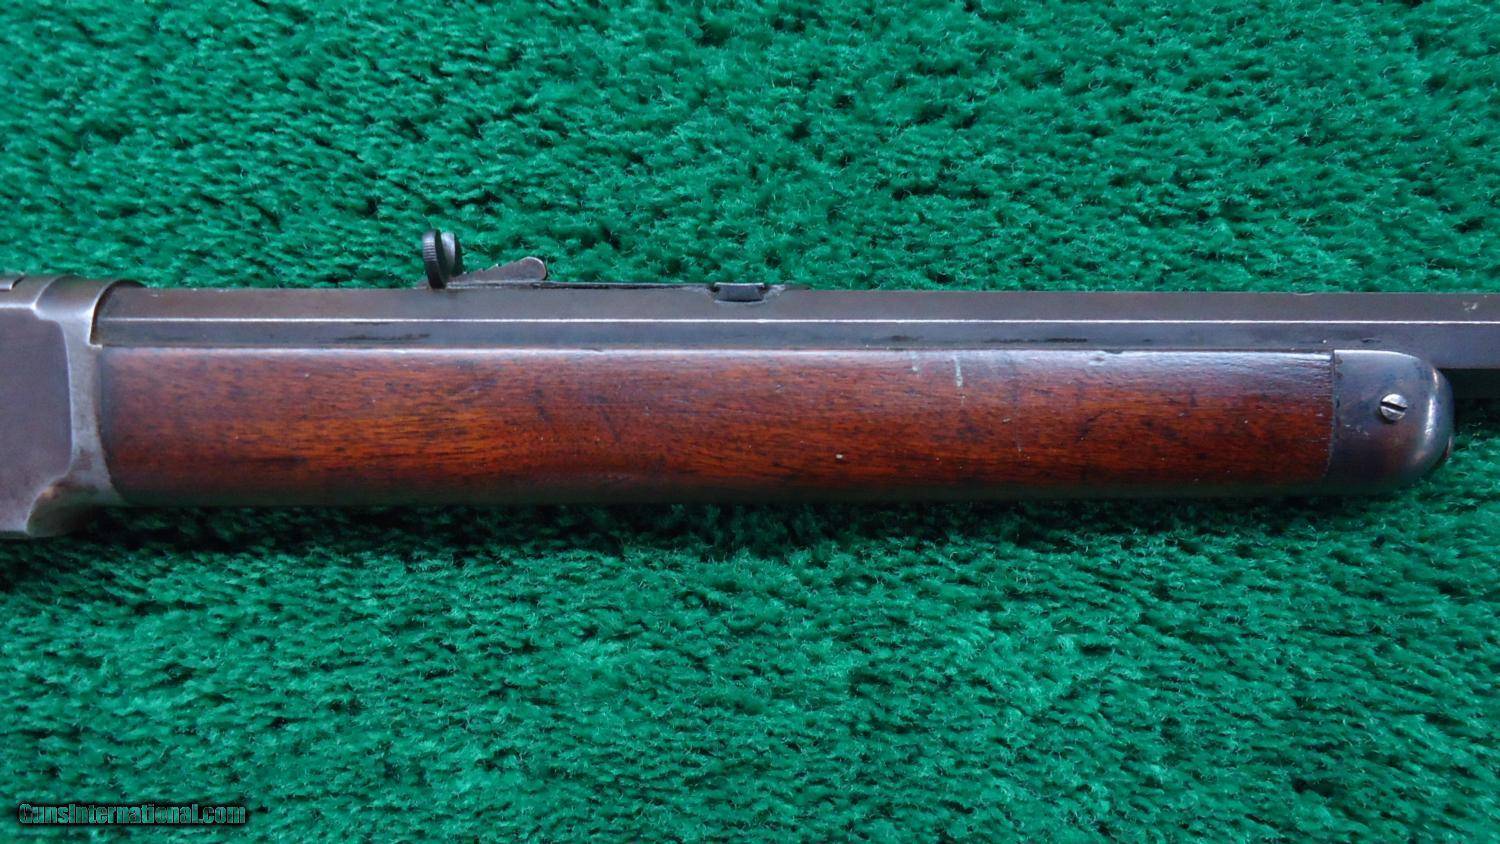 Winchester model 1894